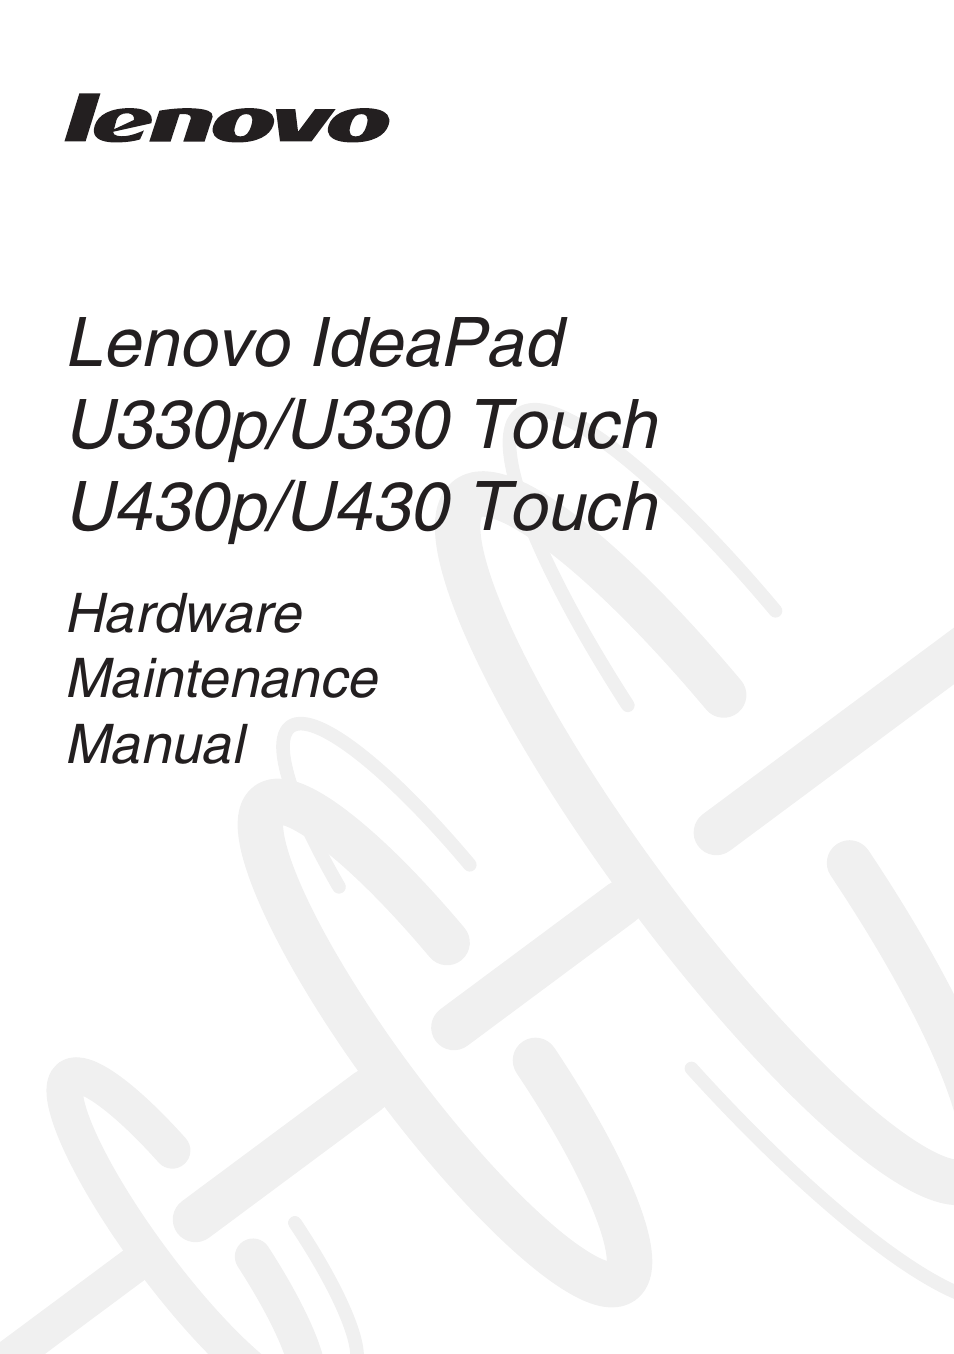 Lenovo IdeaPad U330 Touch Notebook User Manual | 91 pages | Also for:  IdeaPad U430p Notebook, IdeaPad U330p Notebook, IdeaPad U430 Touch Notebook